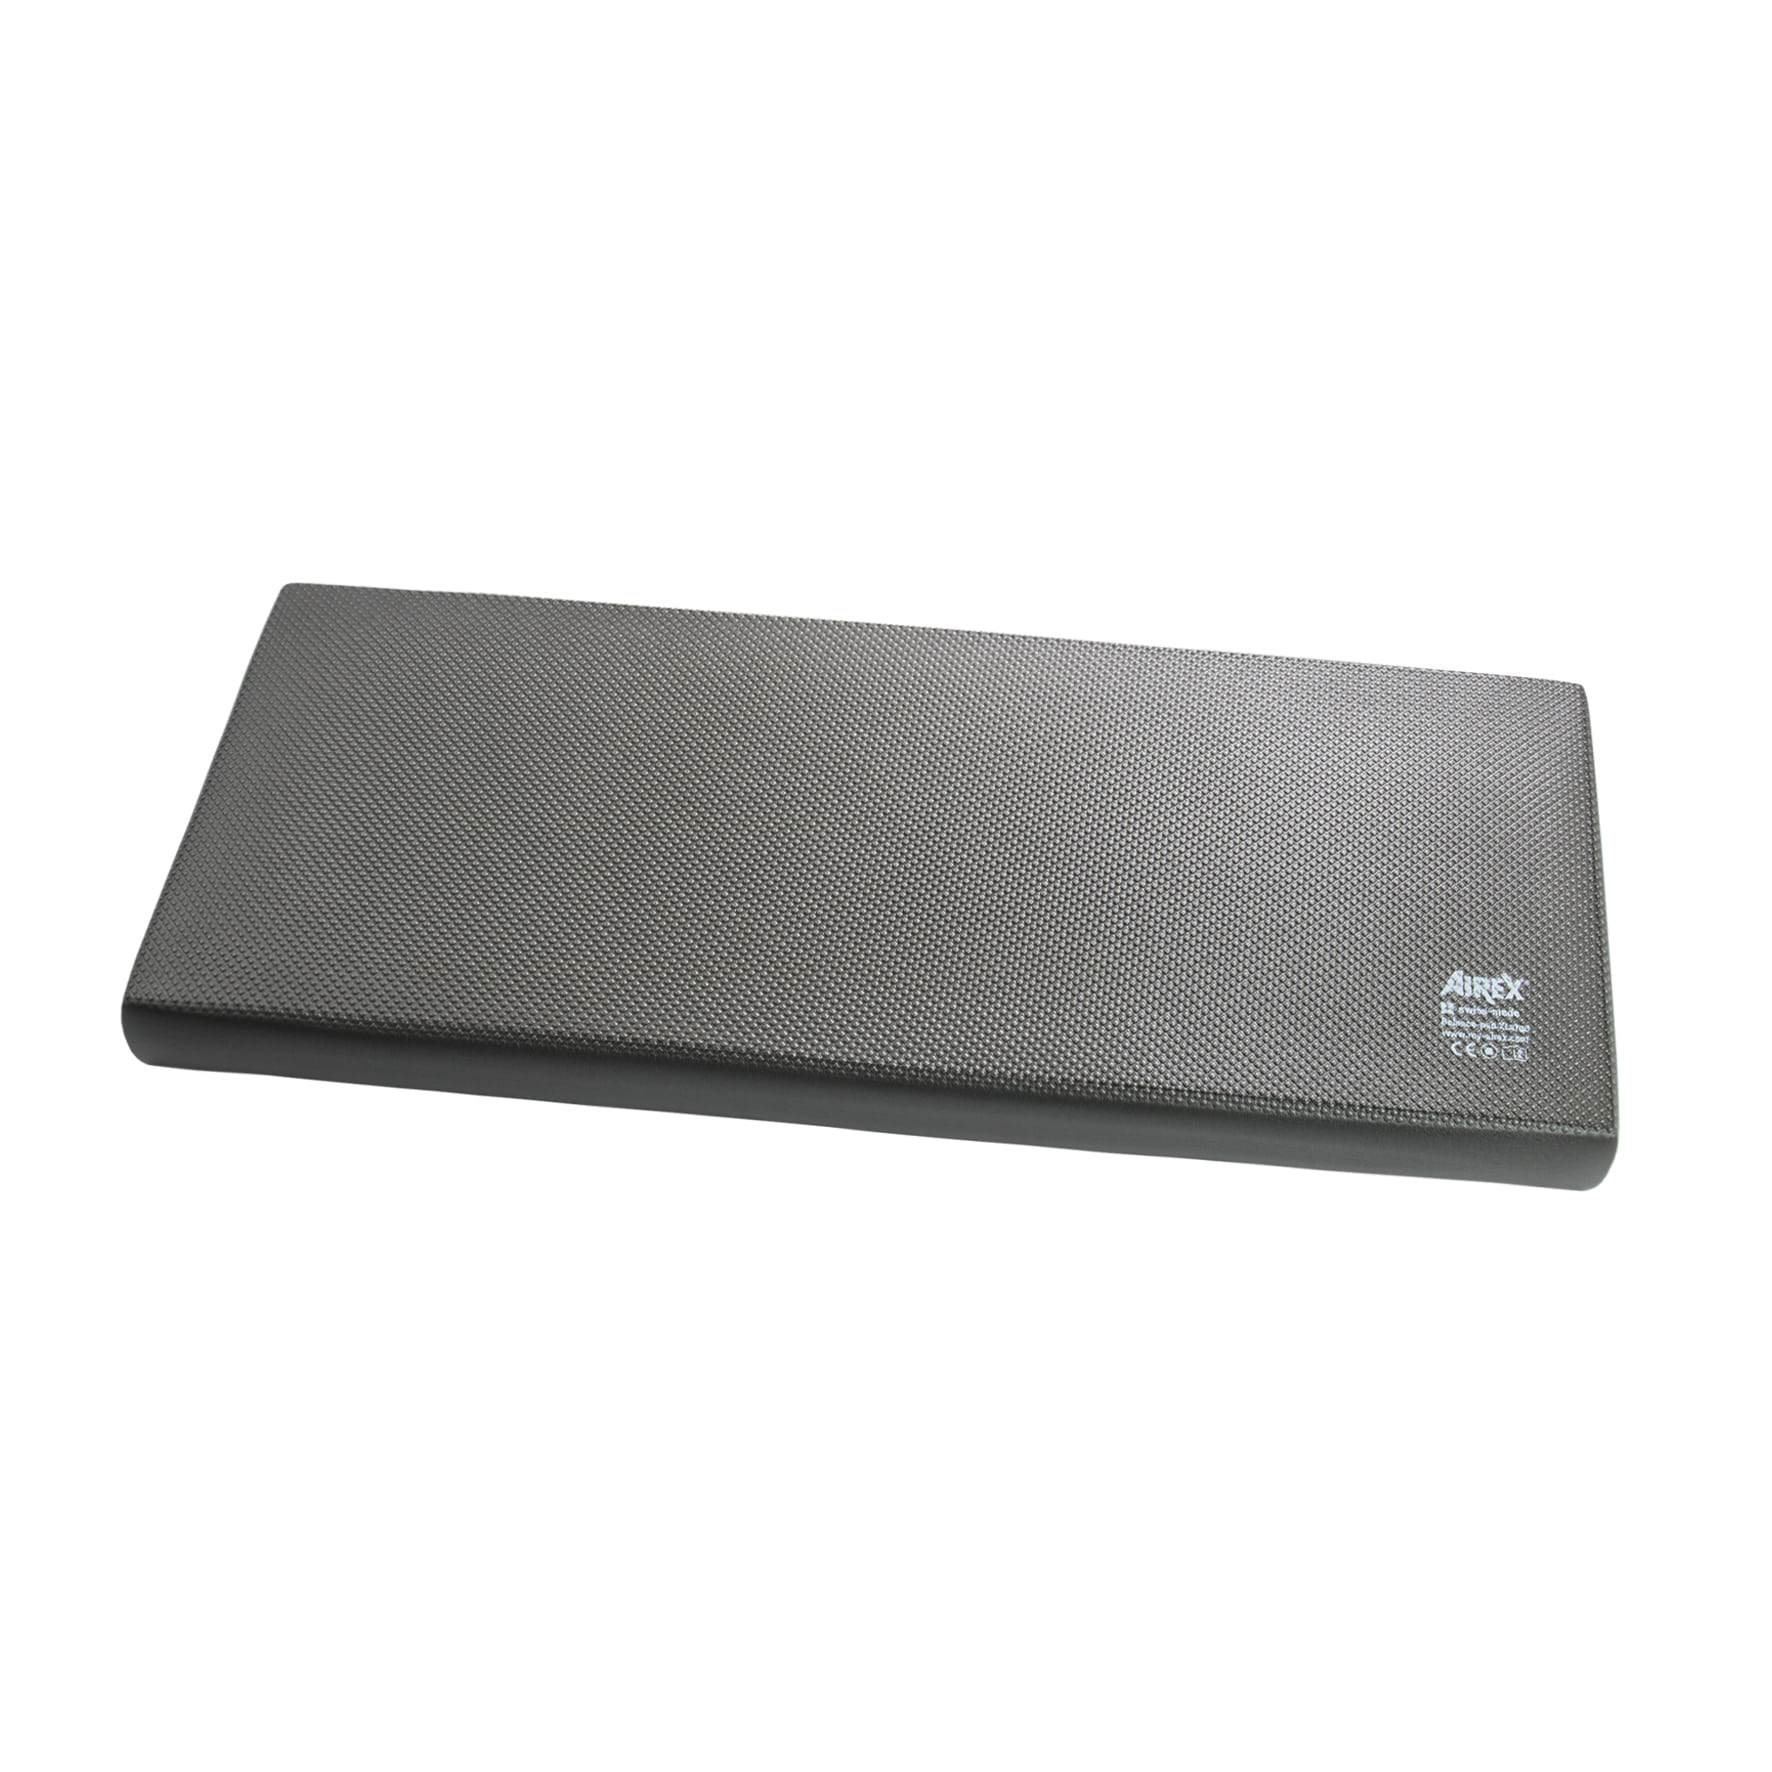 &#039;22 New - Airex® Balance Pad Elite Lava XL(대형)